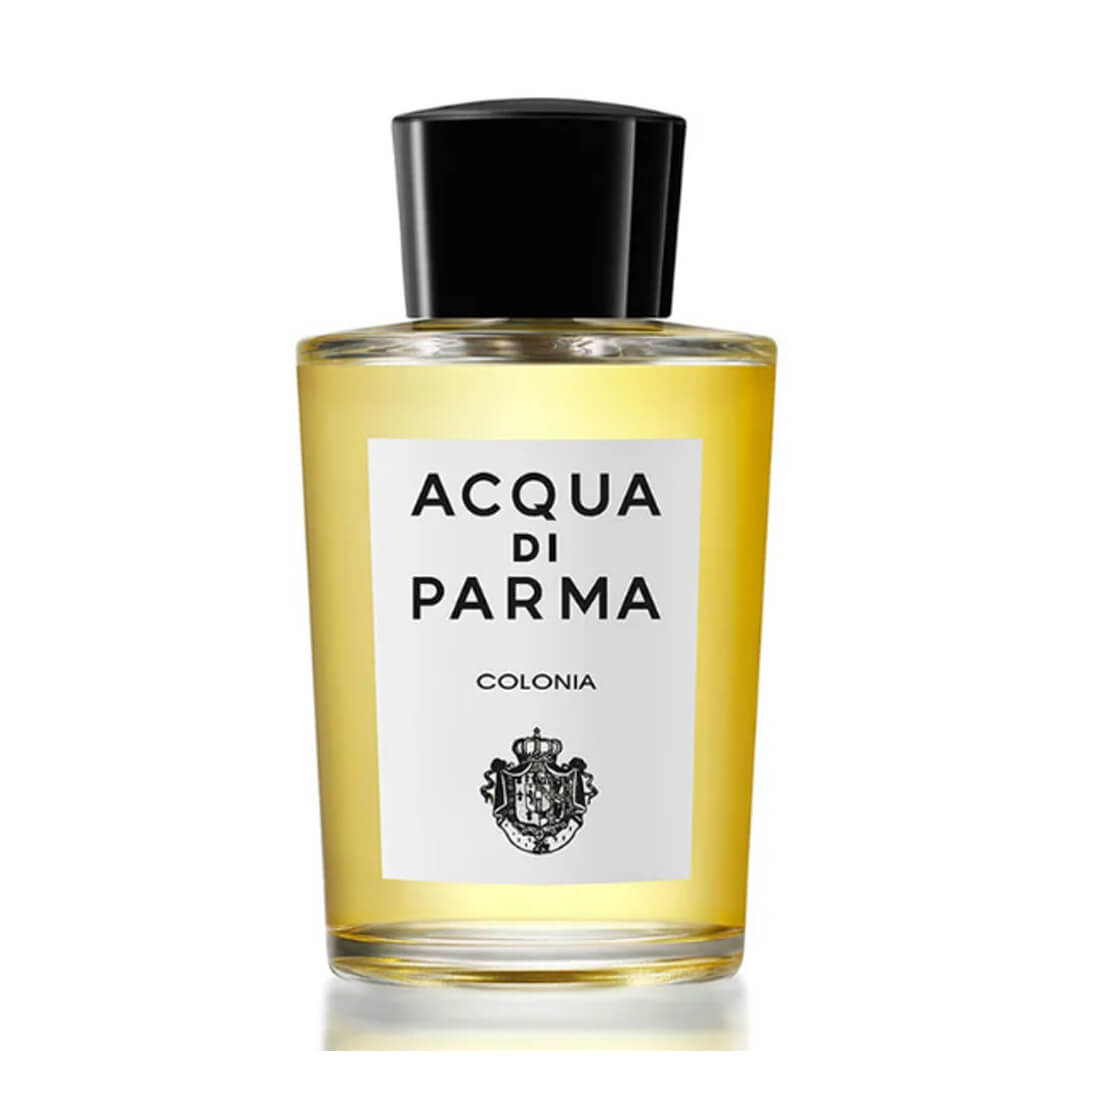 Acqua Di Parma Colonia Eau De Cologne Perfume For Unisex - 100ml